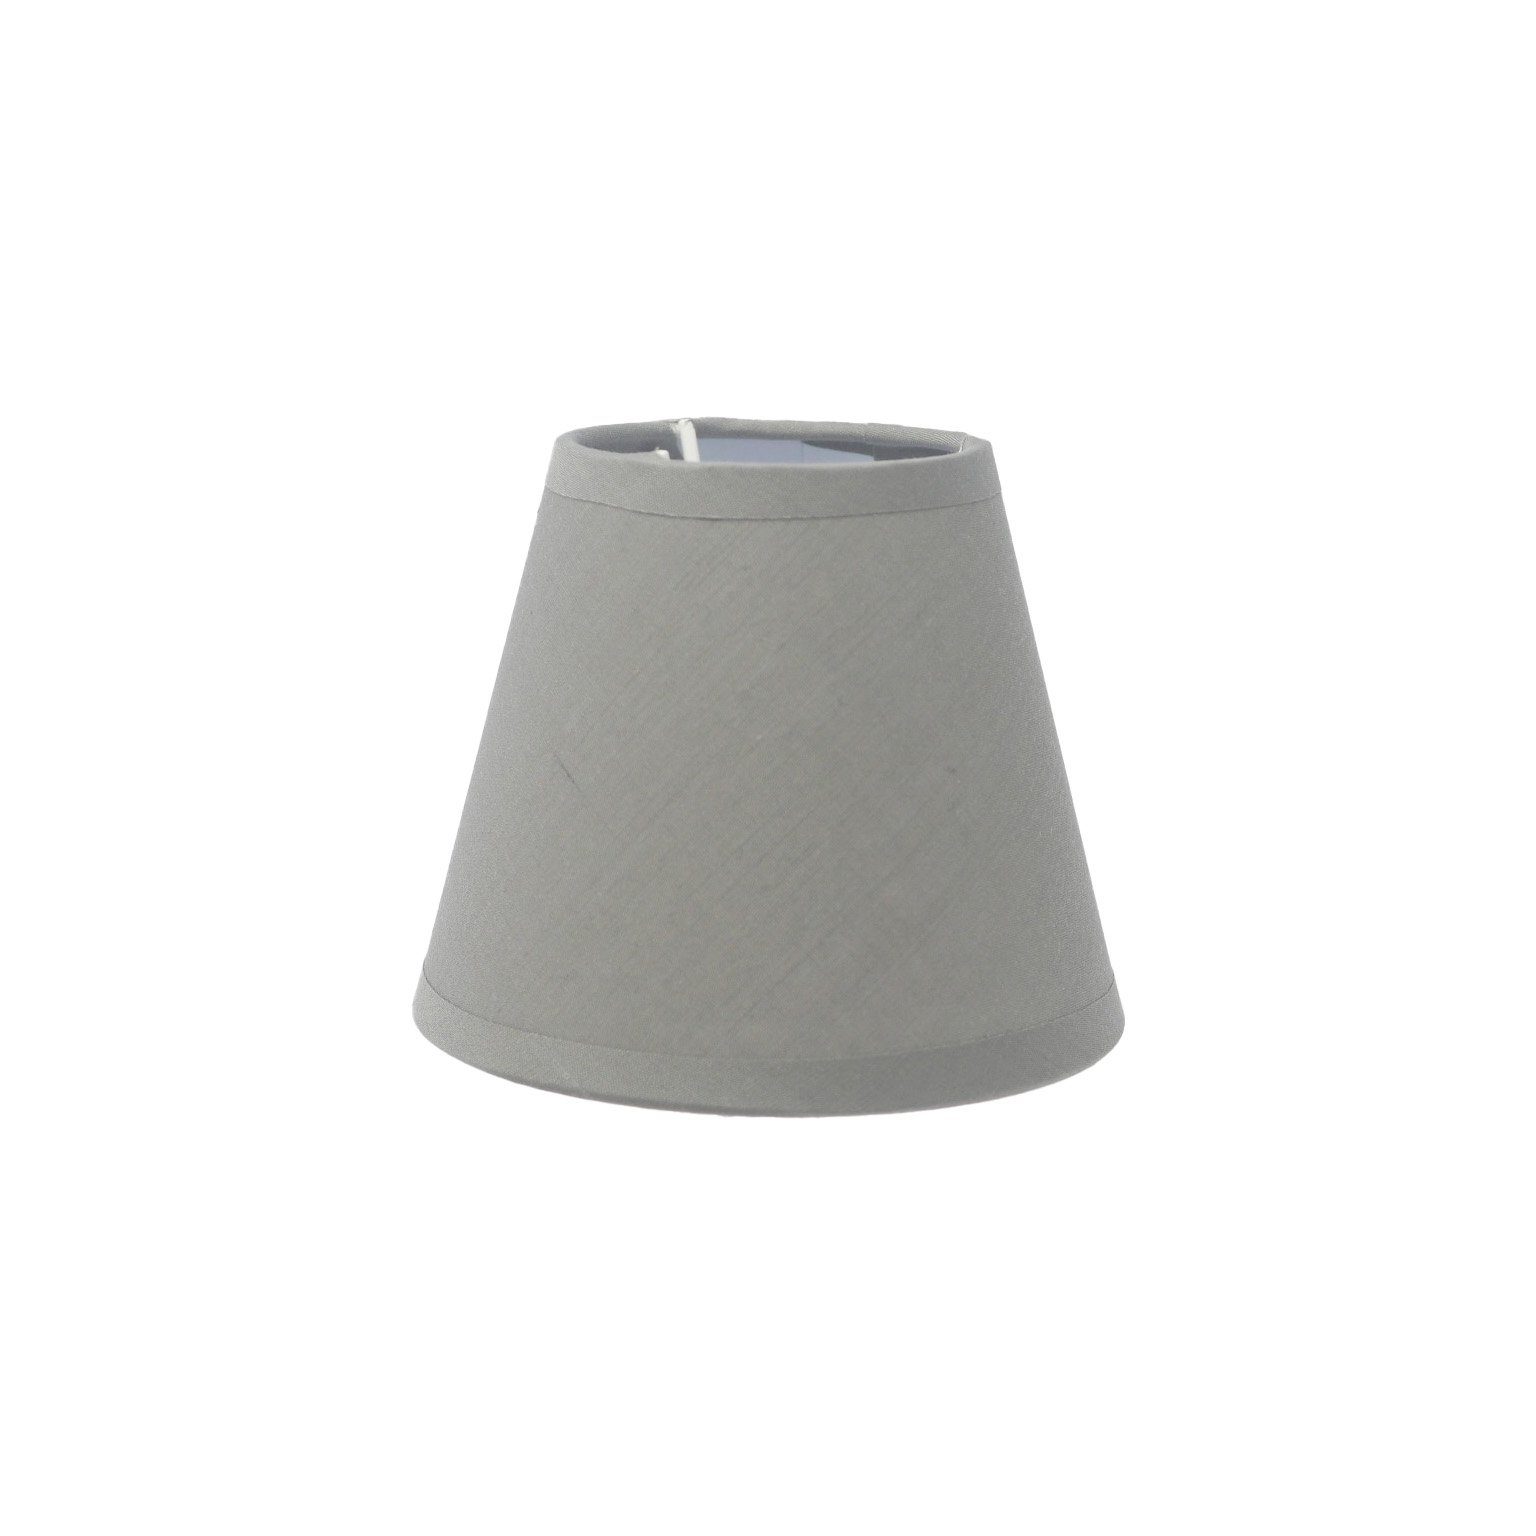 B&S Lampenschirm Mini Lampemschirm grau H 10,5 x Ø 12 cm für E14 Standardfassungen